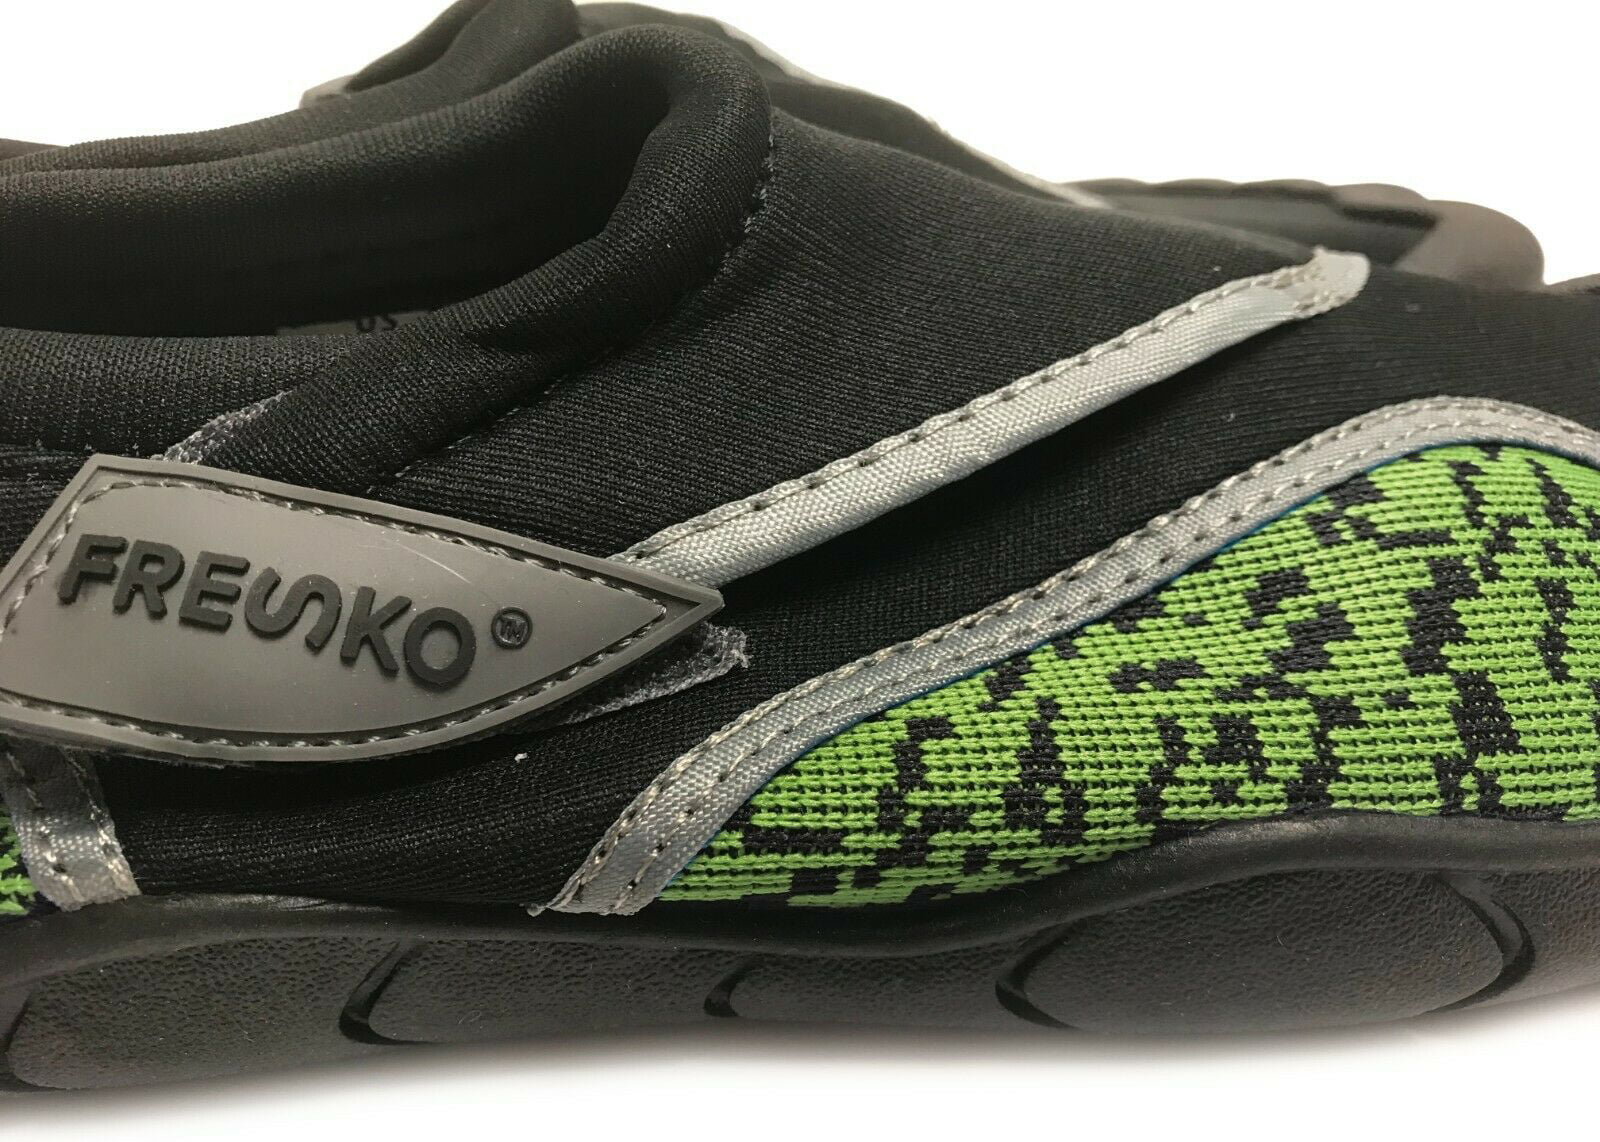 Black and Green Details about   Fresko Men's Slip On Comfort Water Shoes 11 Medium US 